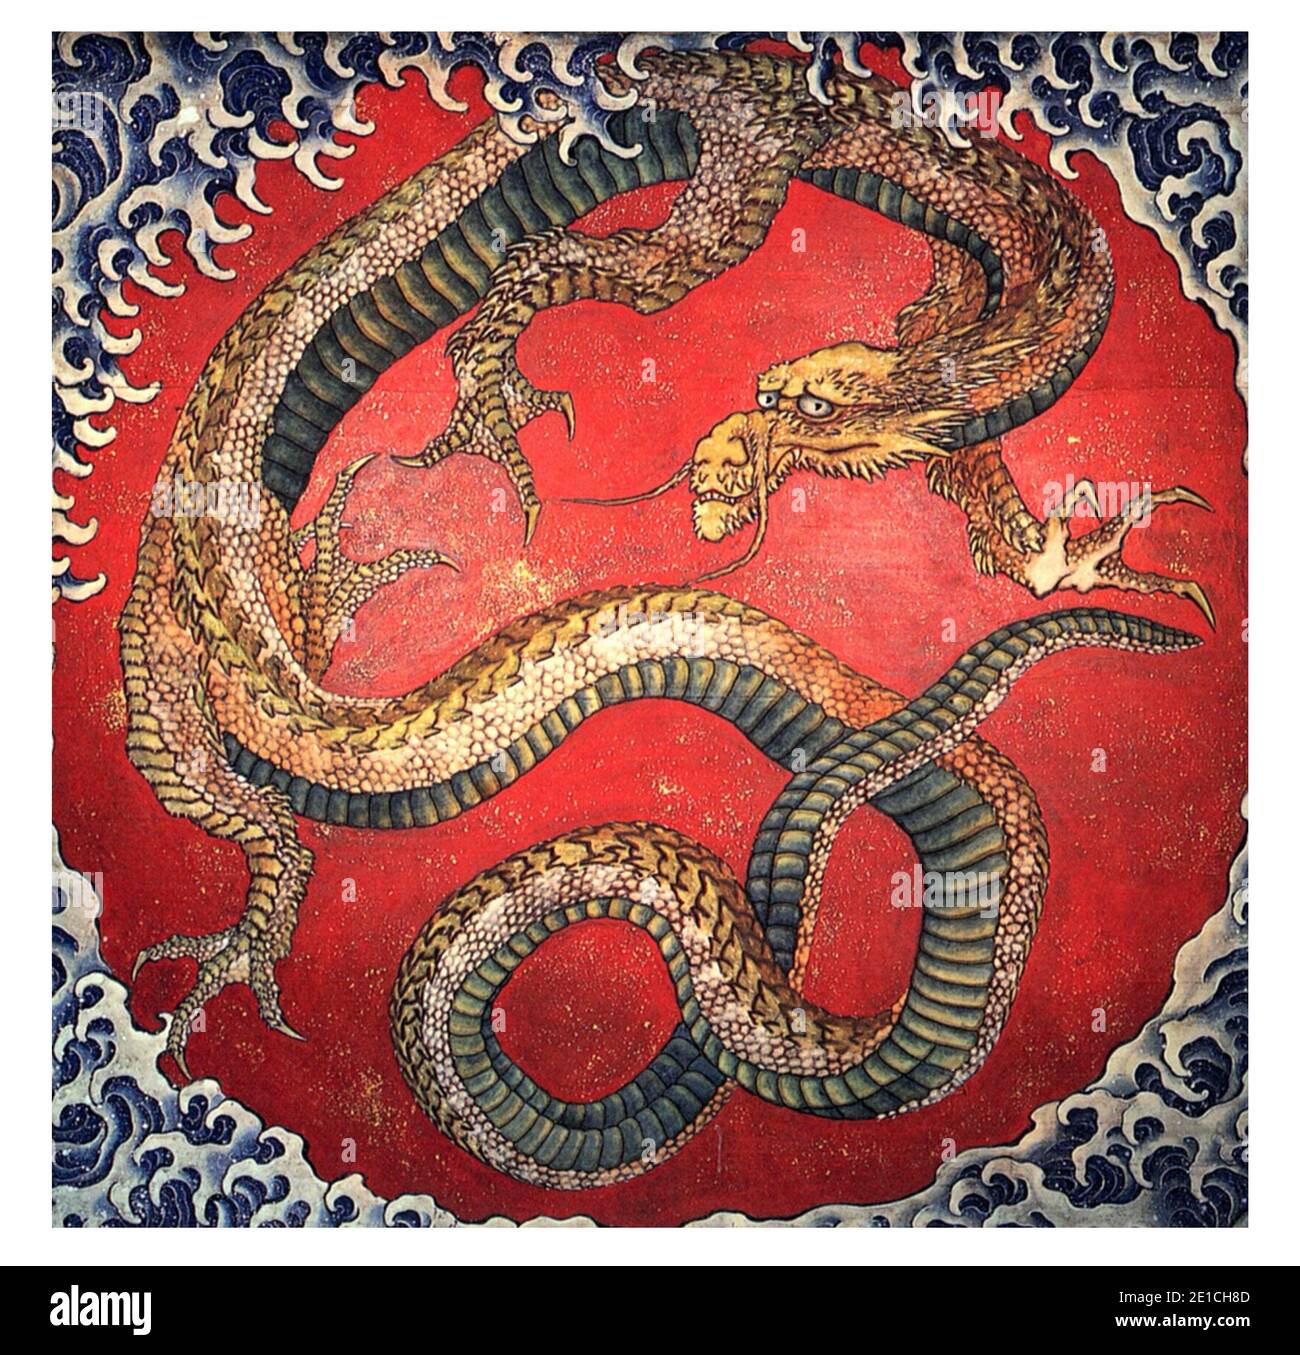 Dragon by Hokusai Stock Photo